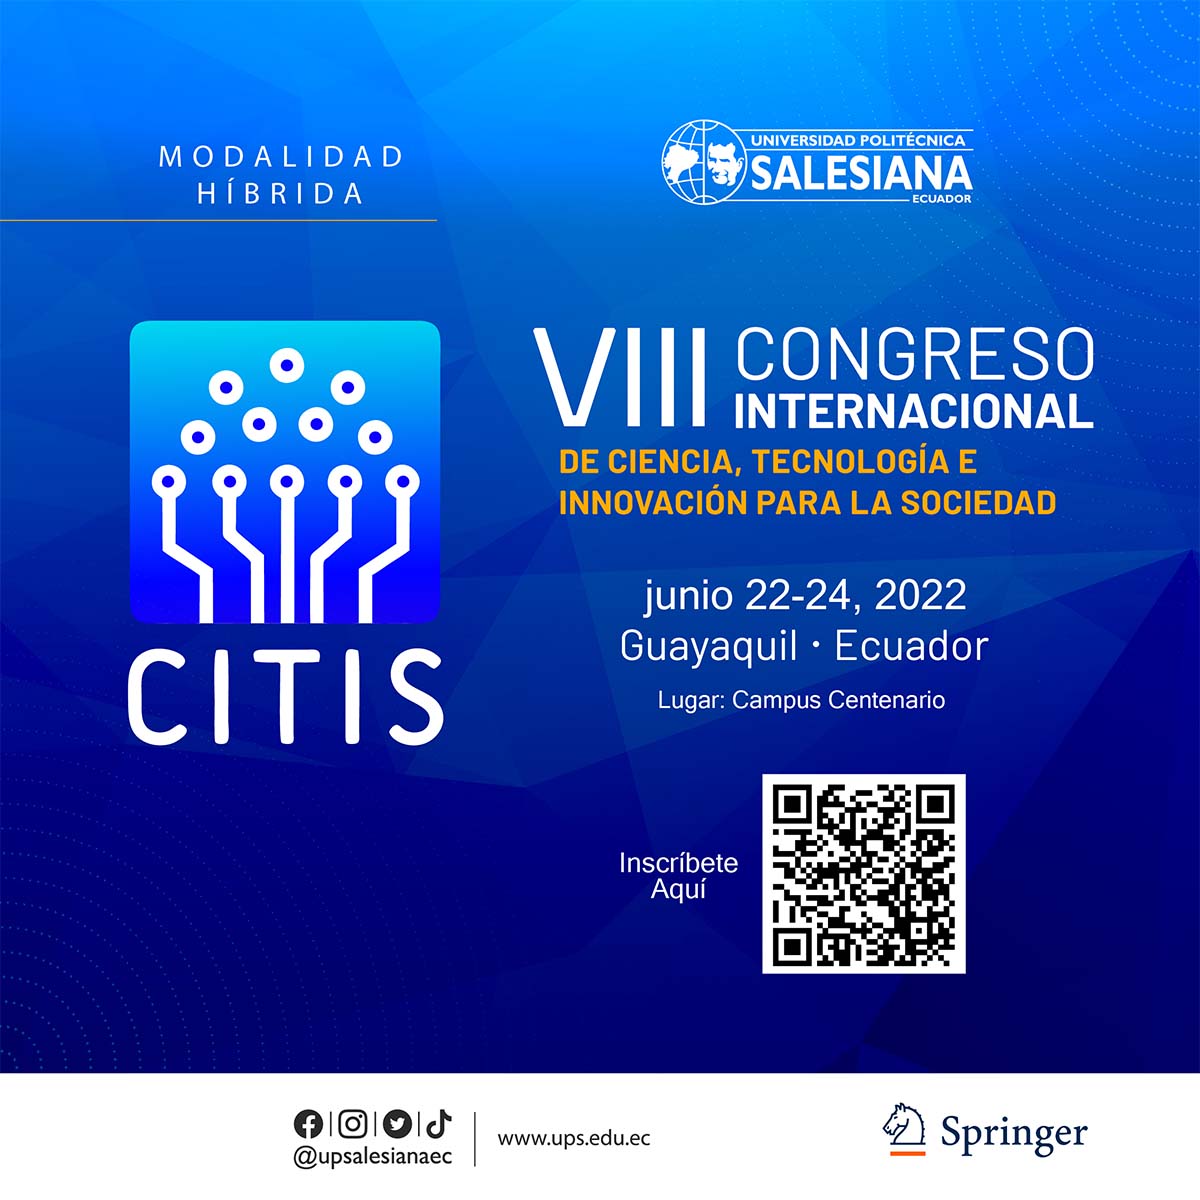 Afiche promocional para la Convocatoria del CITIS 2022